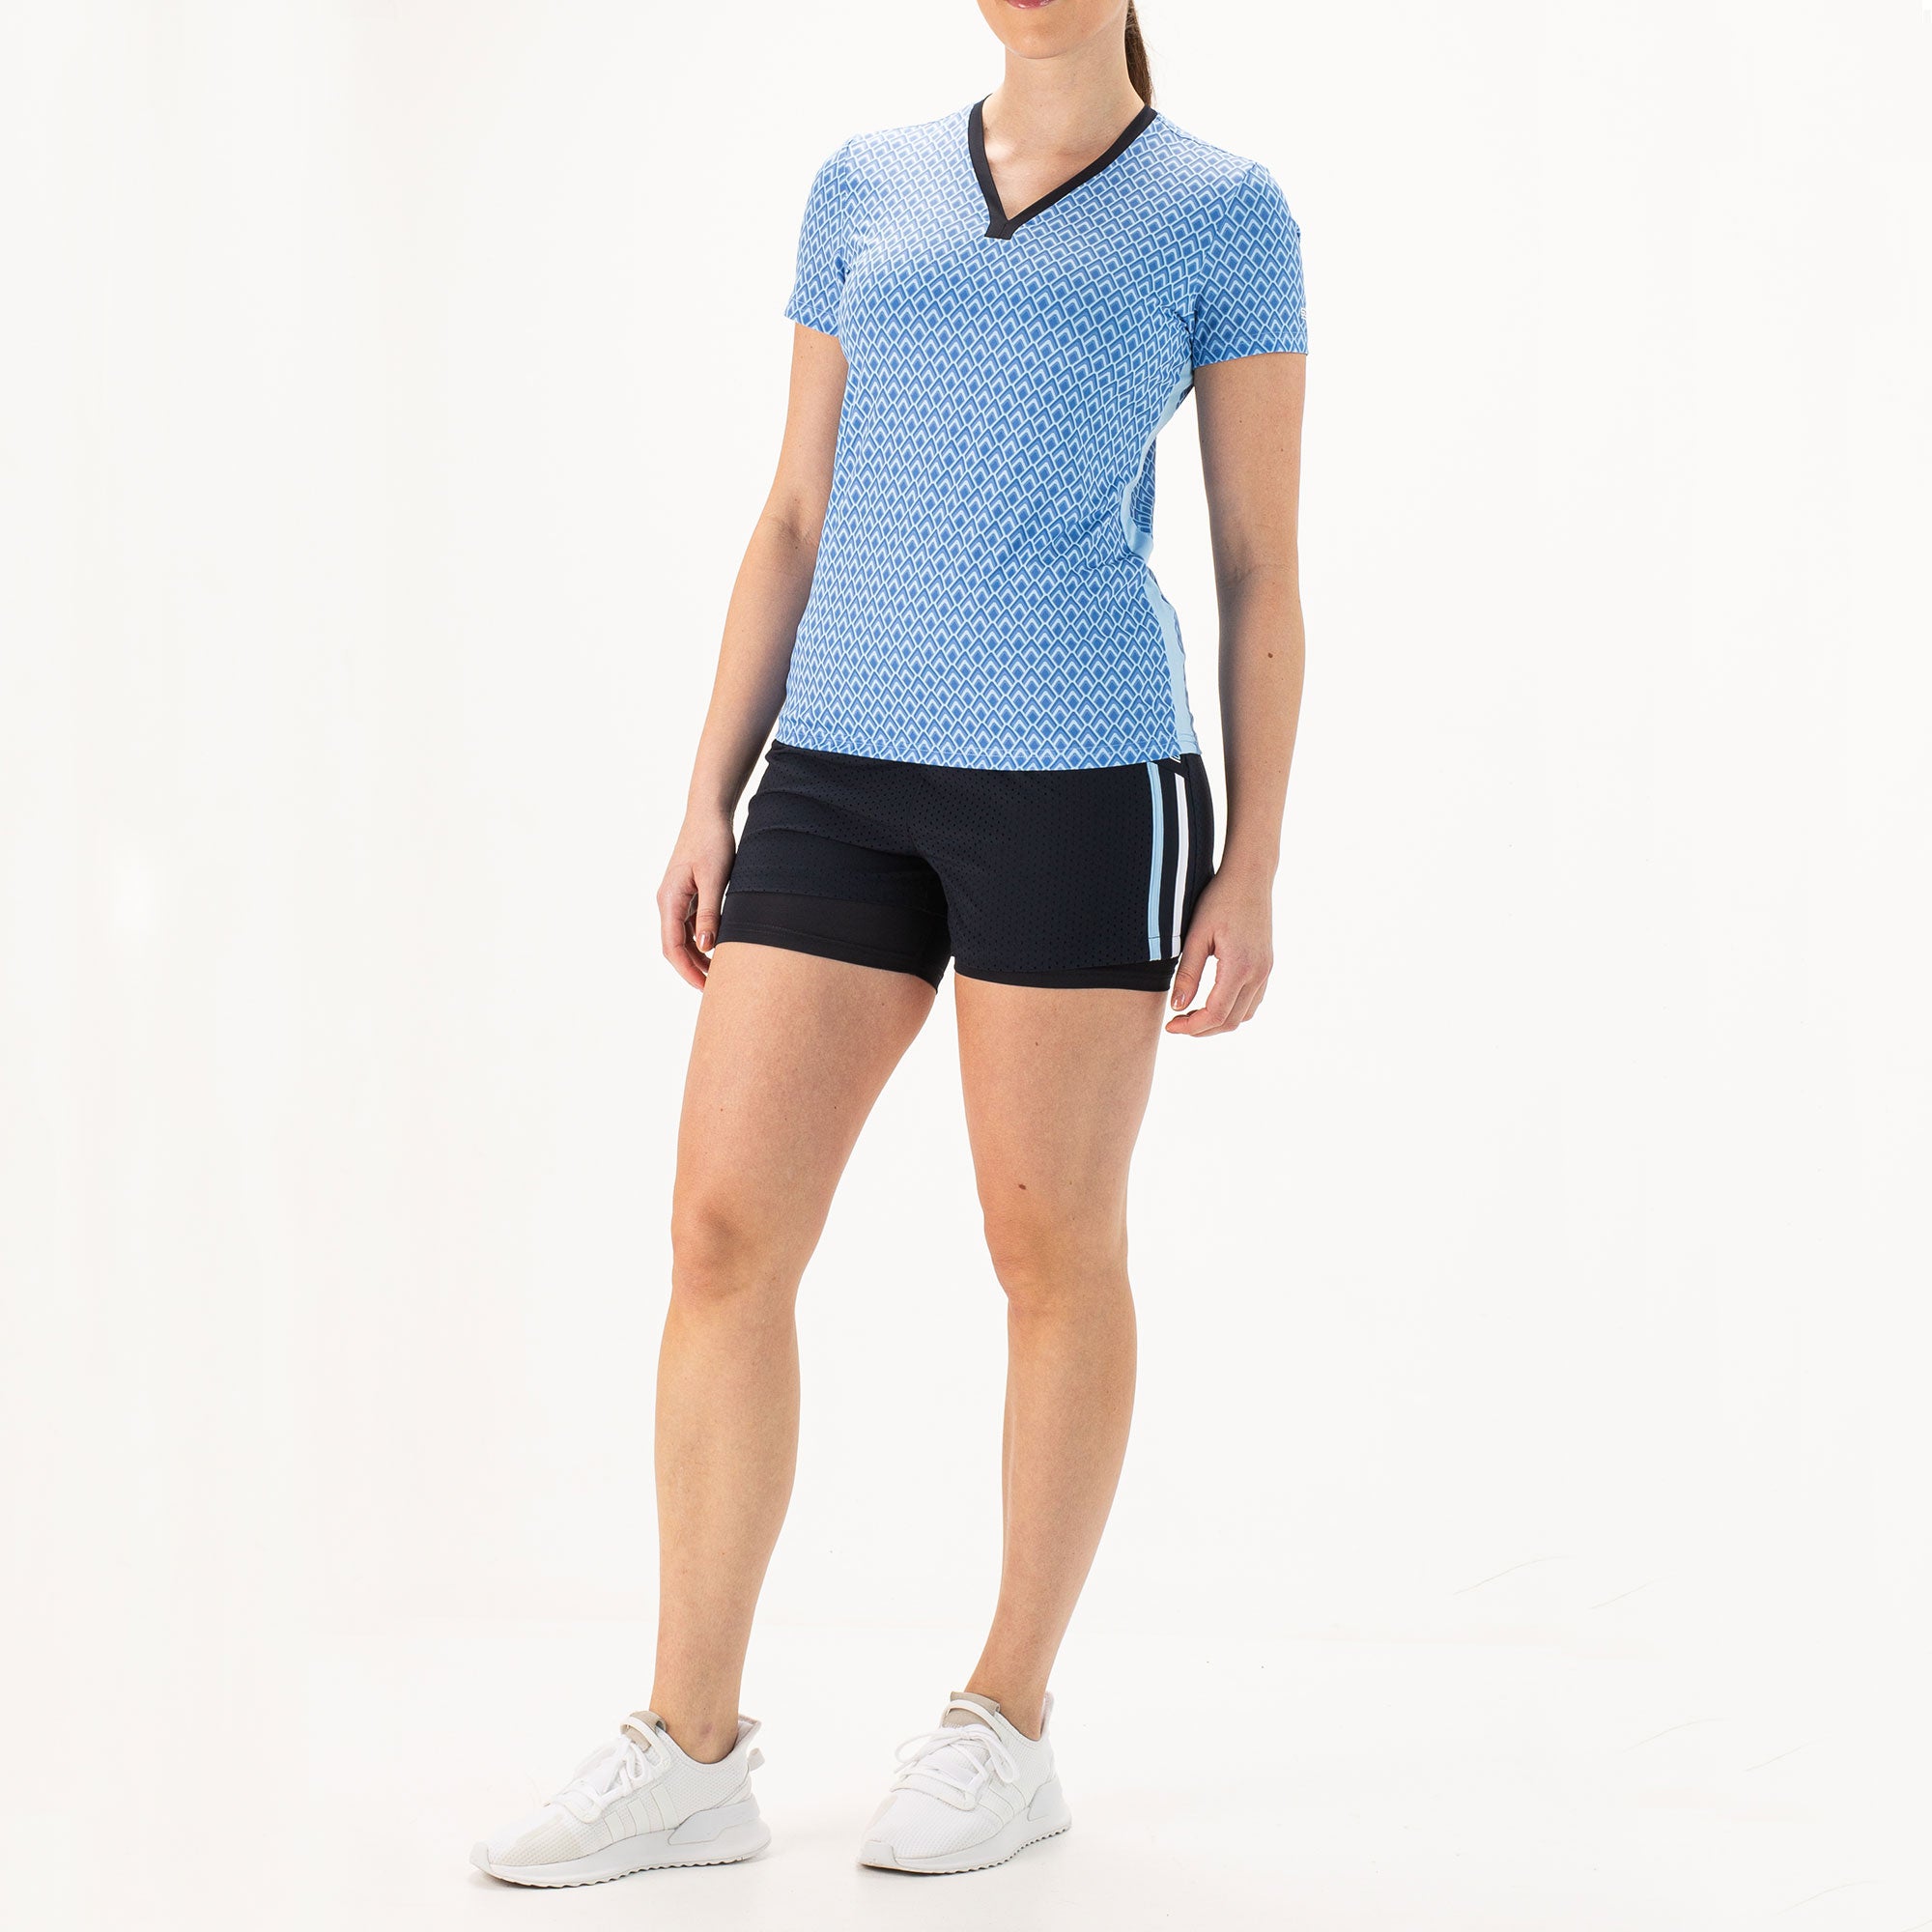 Sjeng Sports Inge Women's Tennis Shirt - Blue (5)